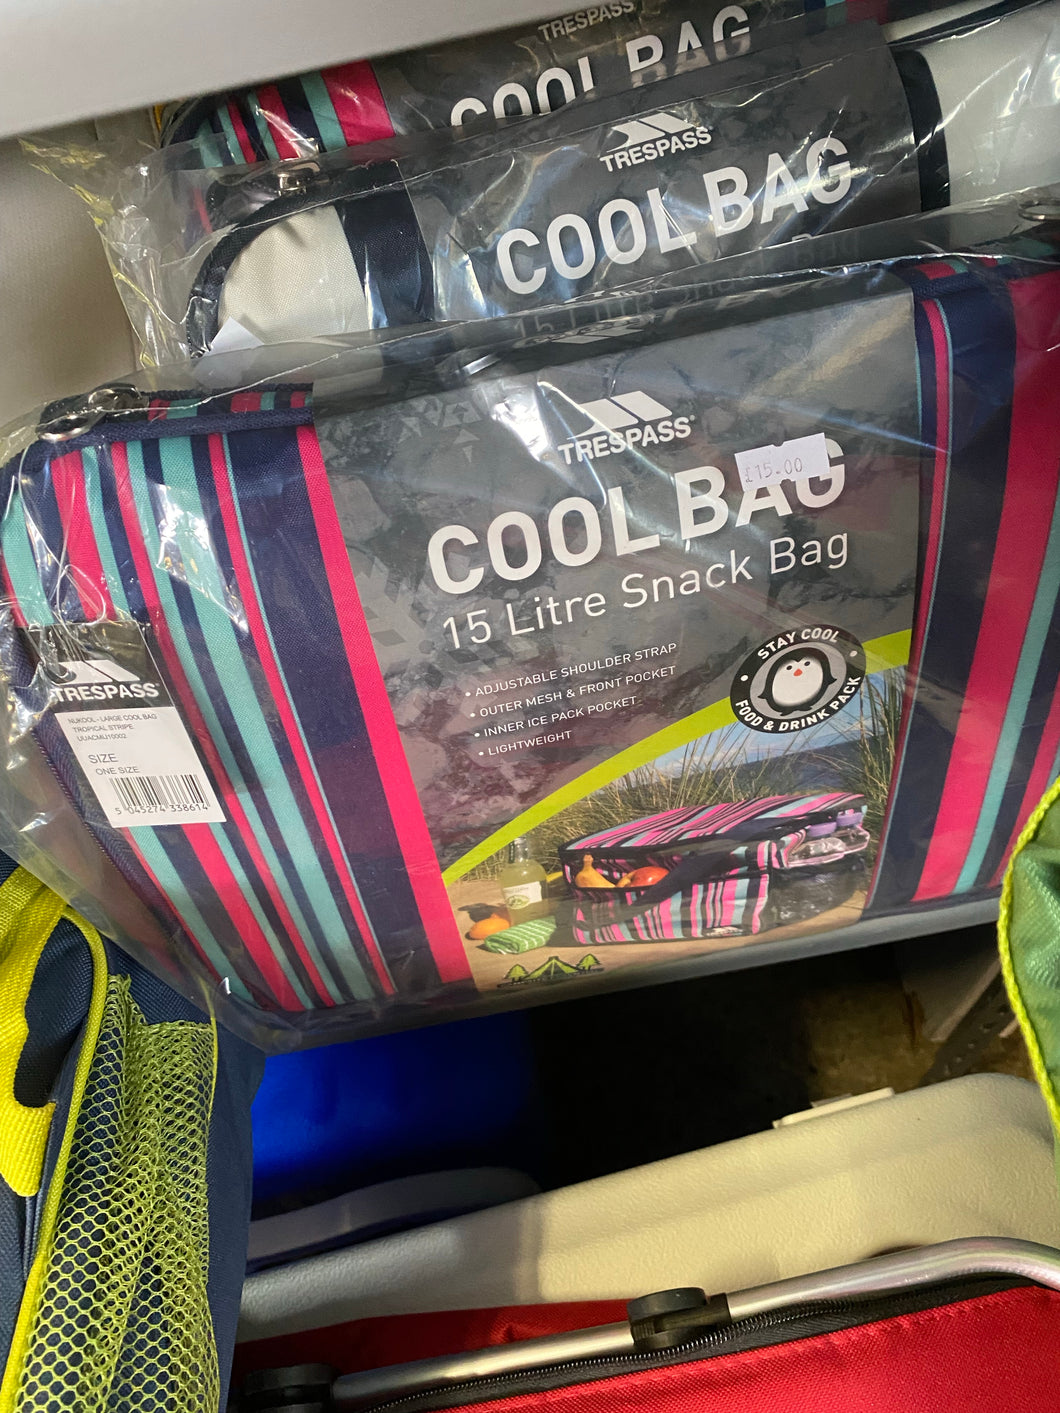 Trespass cool snack bag 1.5 litre